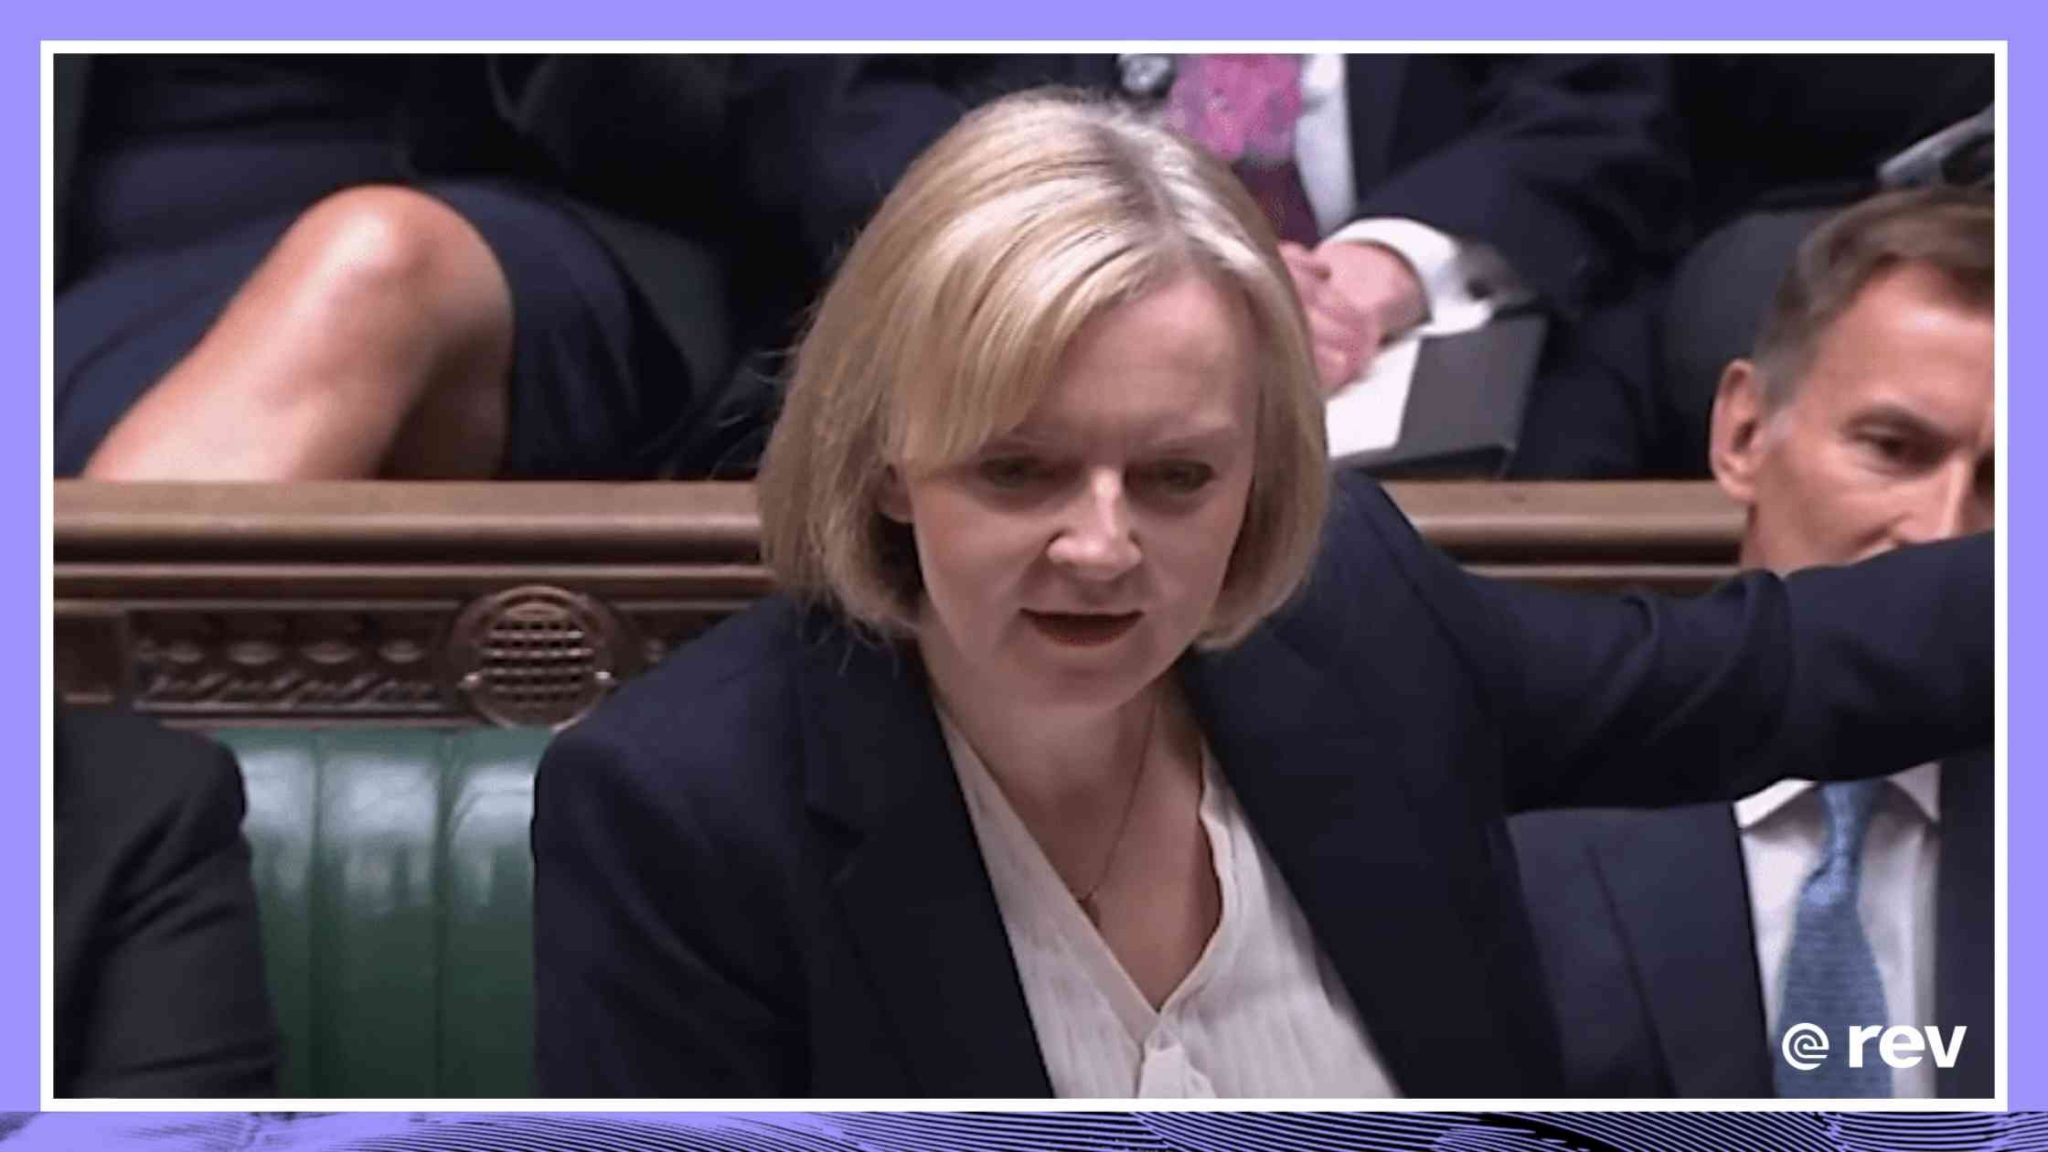 UK Prime Minister Liz Truss faces pressure to resign as economic concerns mount Transcript